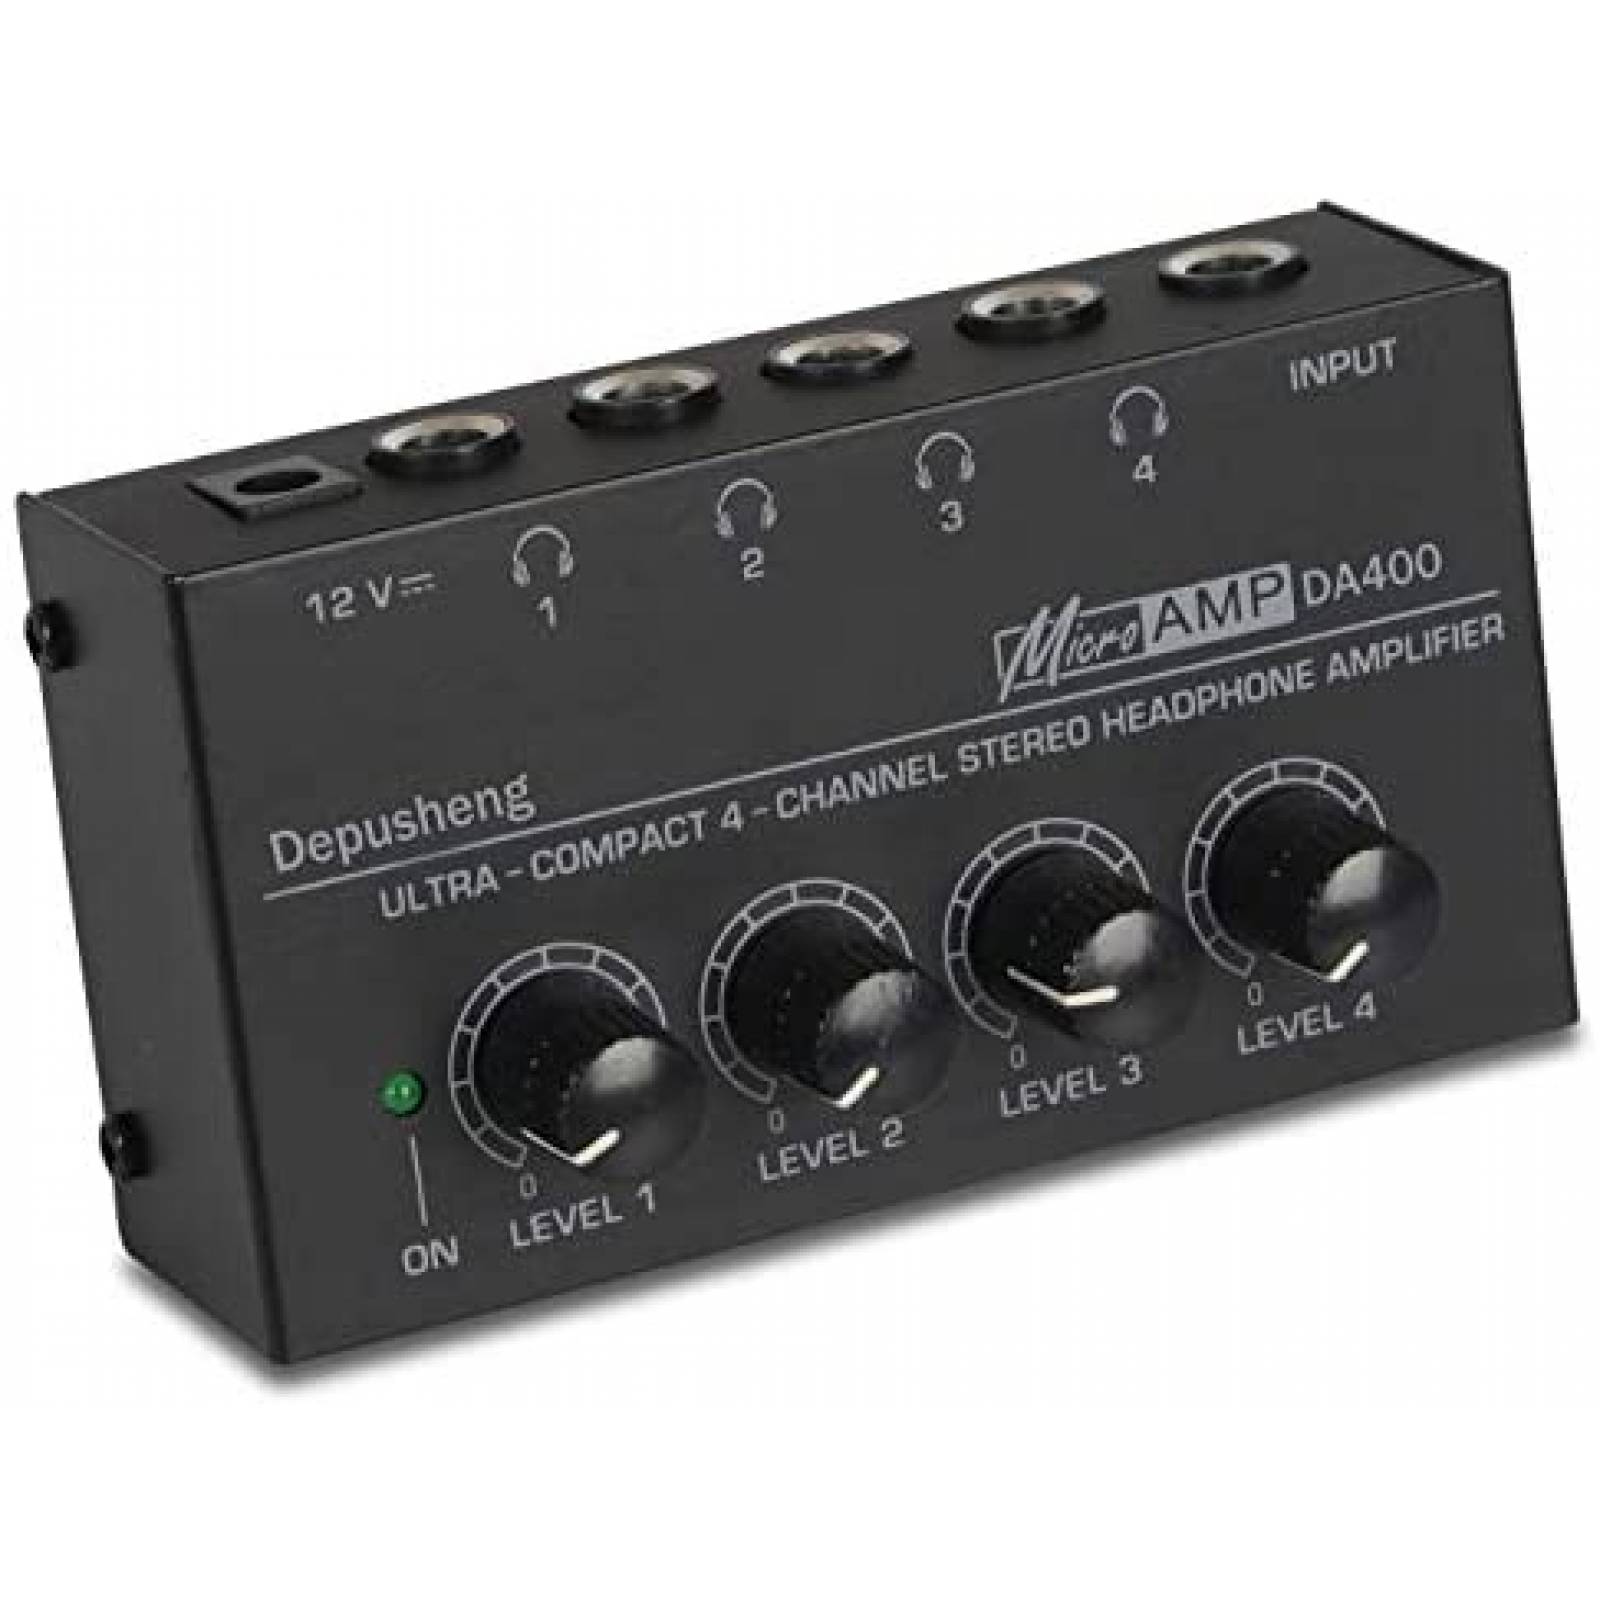 Amplificador Depusheng DA400 Ultra Compacto de 4 Canales